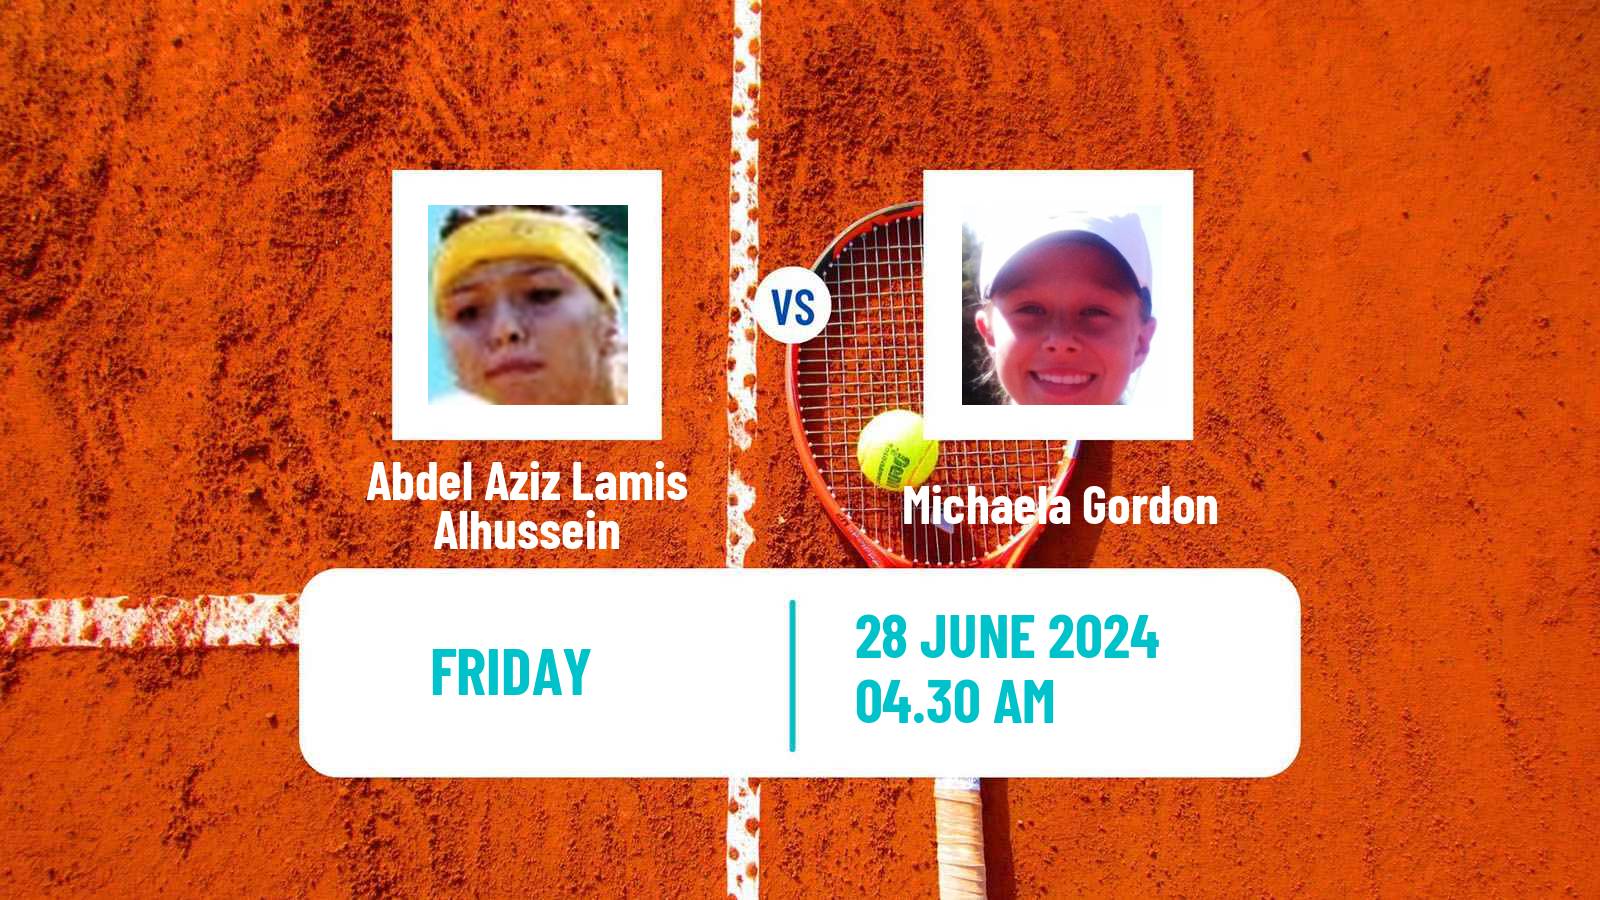 Tennis ITF W15 Monastir 24 Women Abdel Aziz Lamis Alhussein - Michaela Gordon